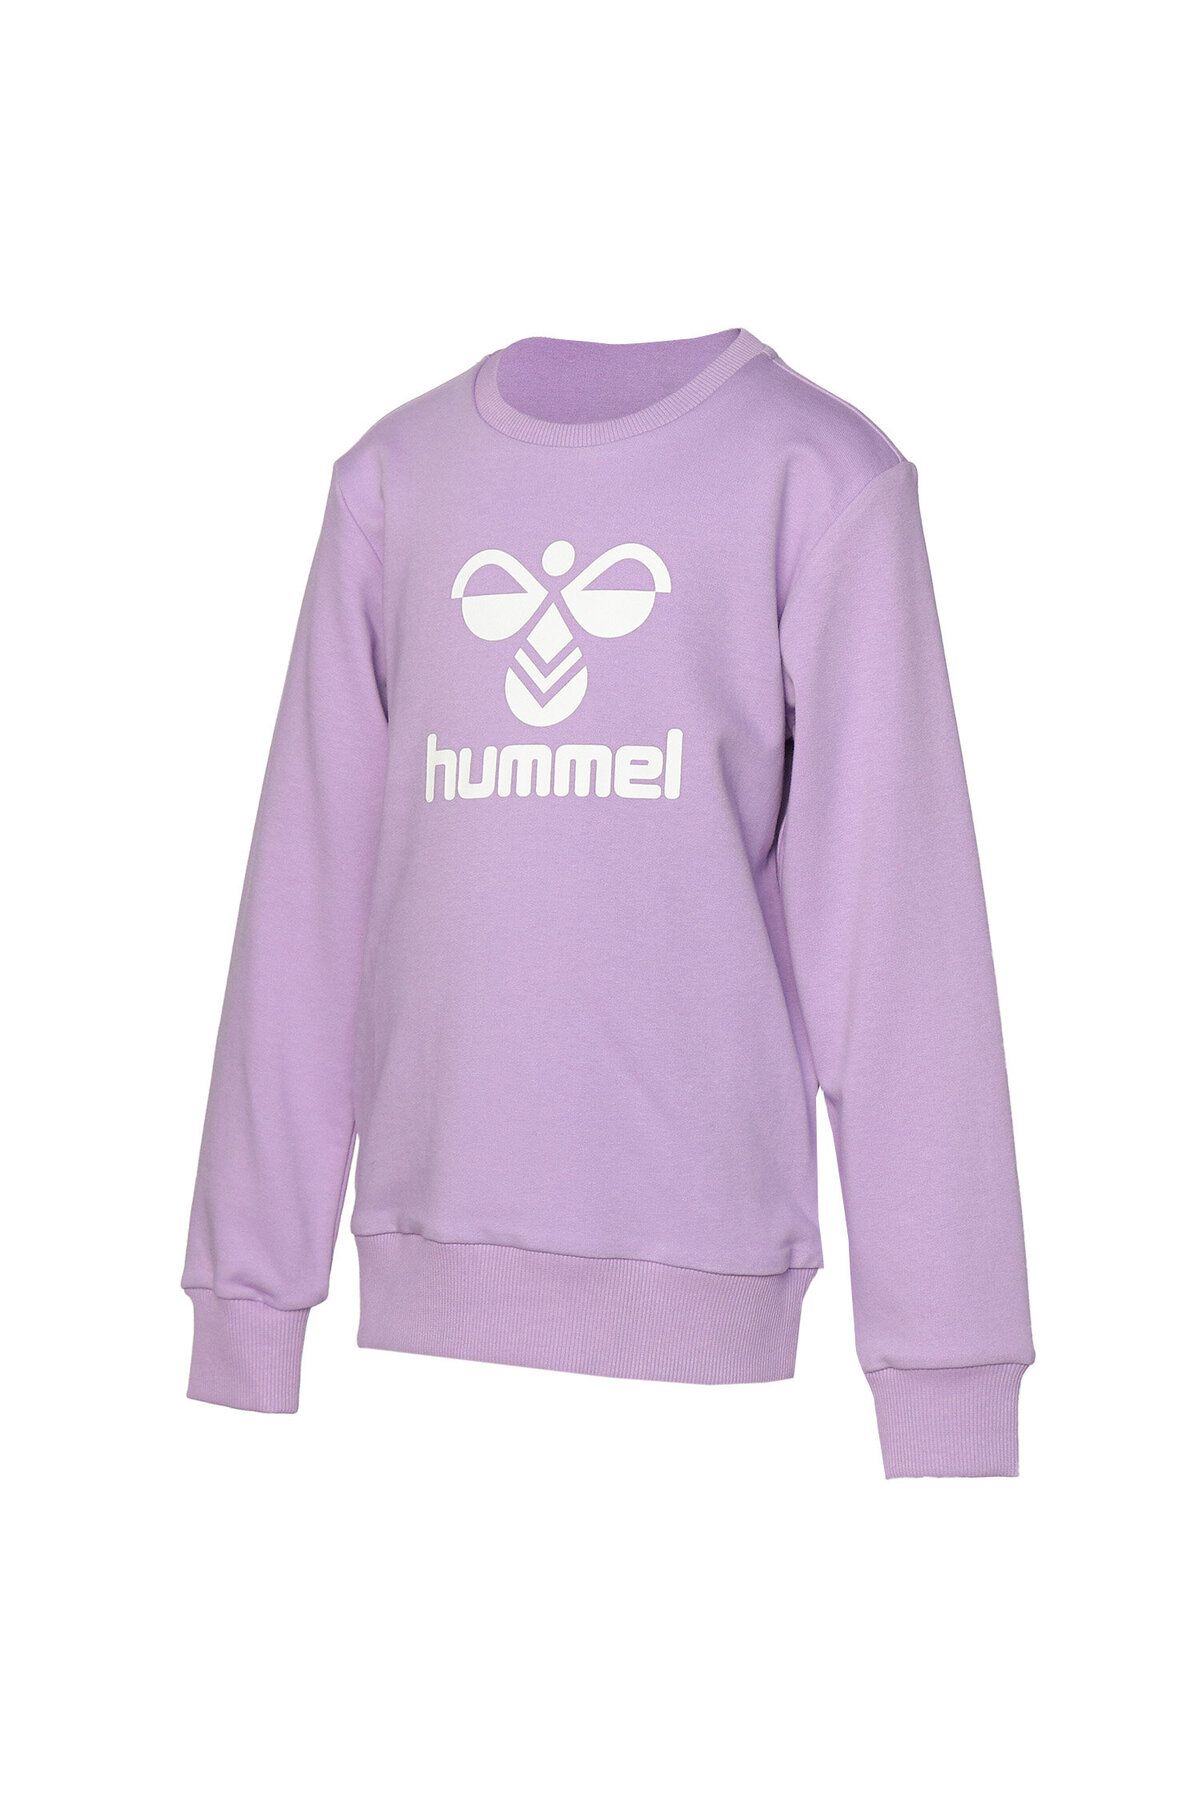 hummel Artemis Kids Sweatshirt 921585-2221